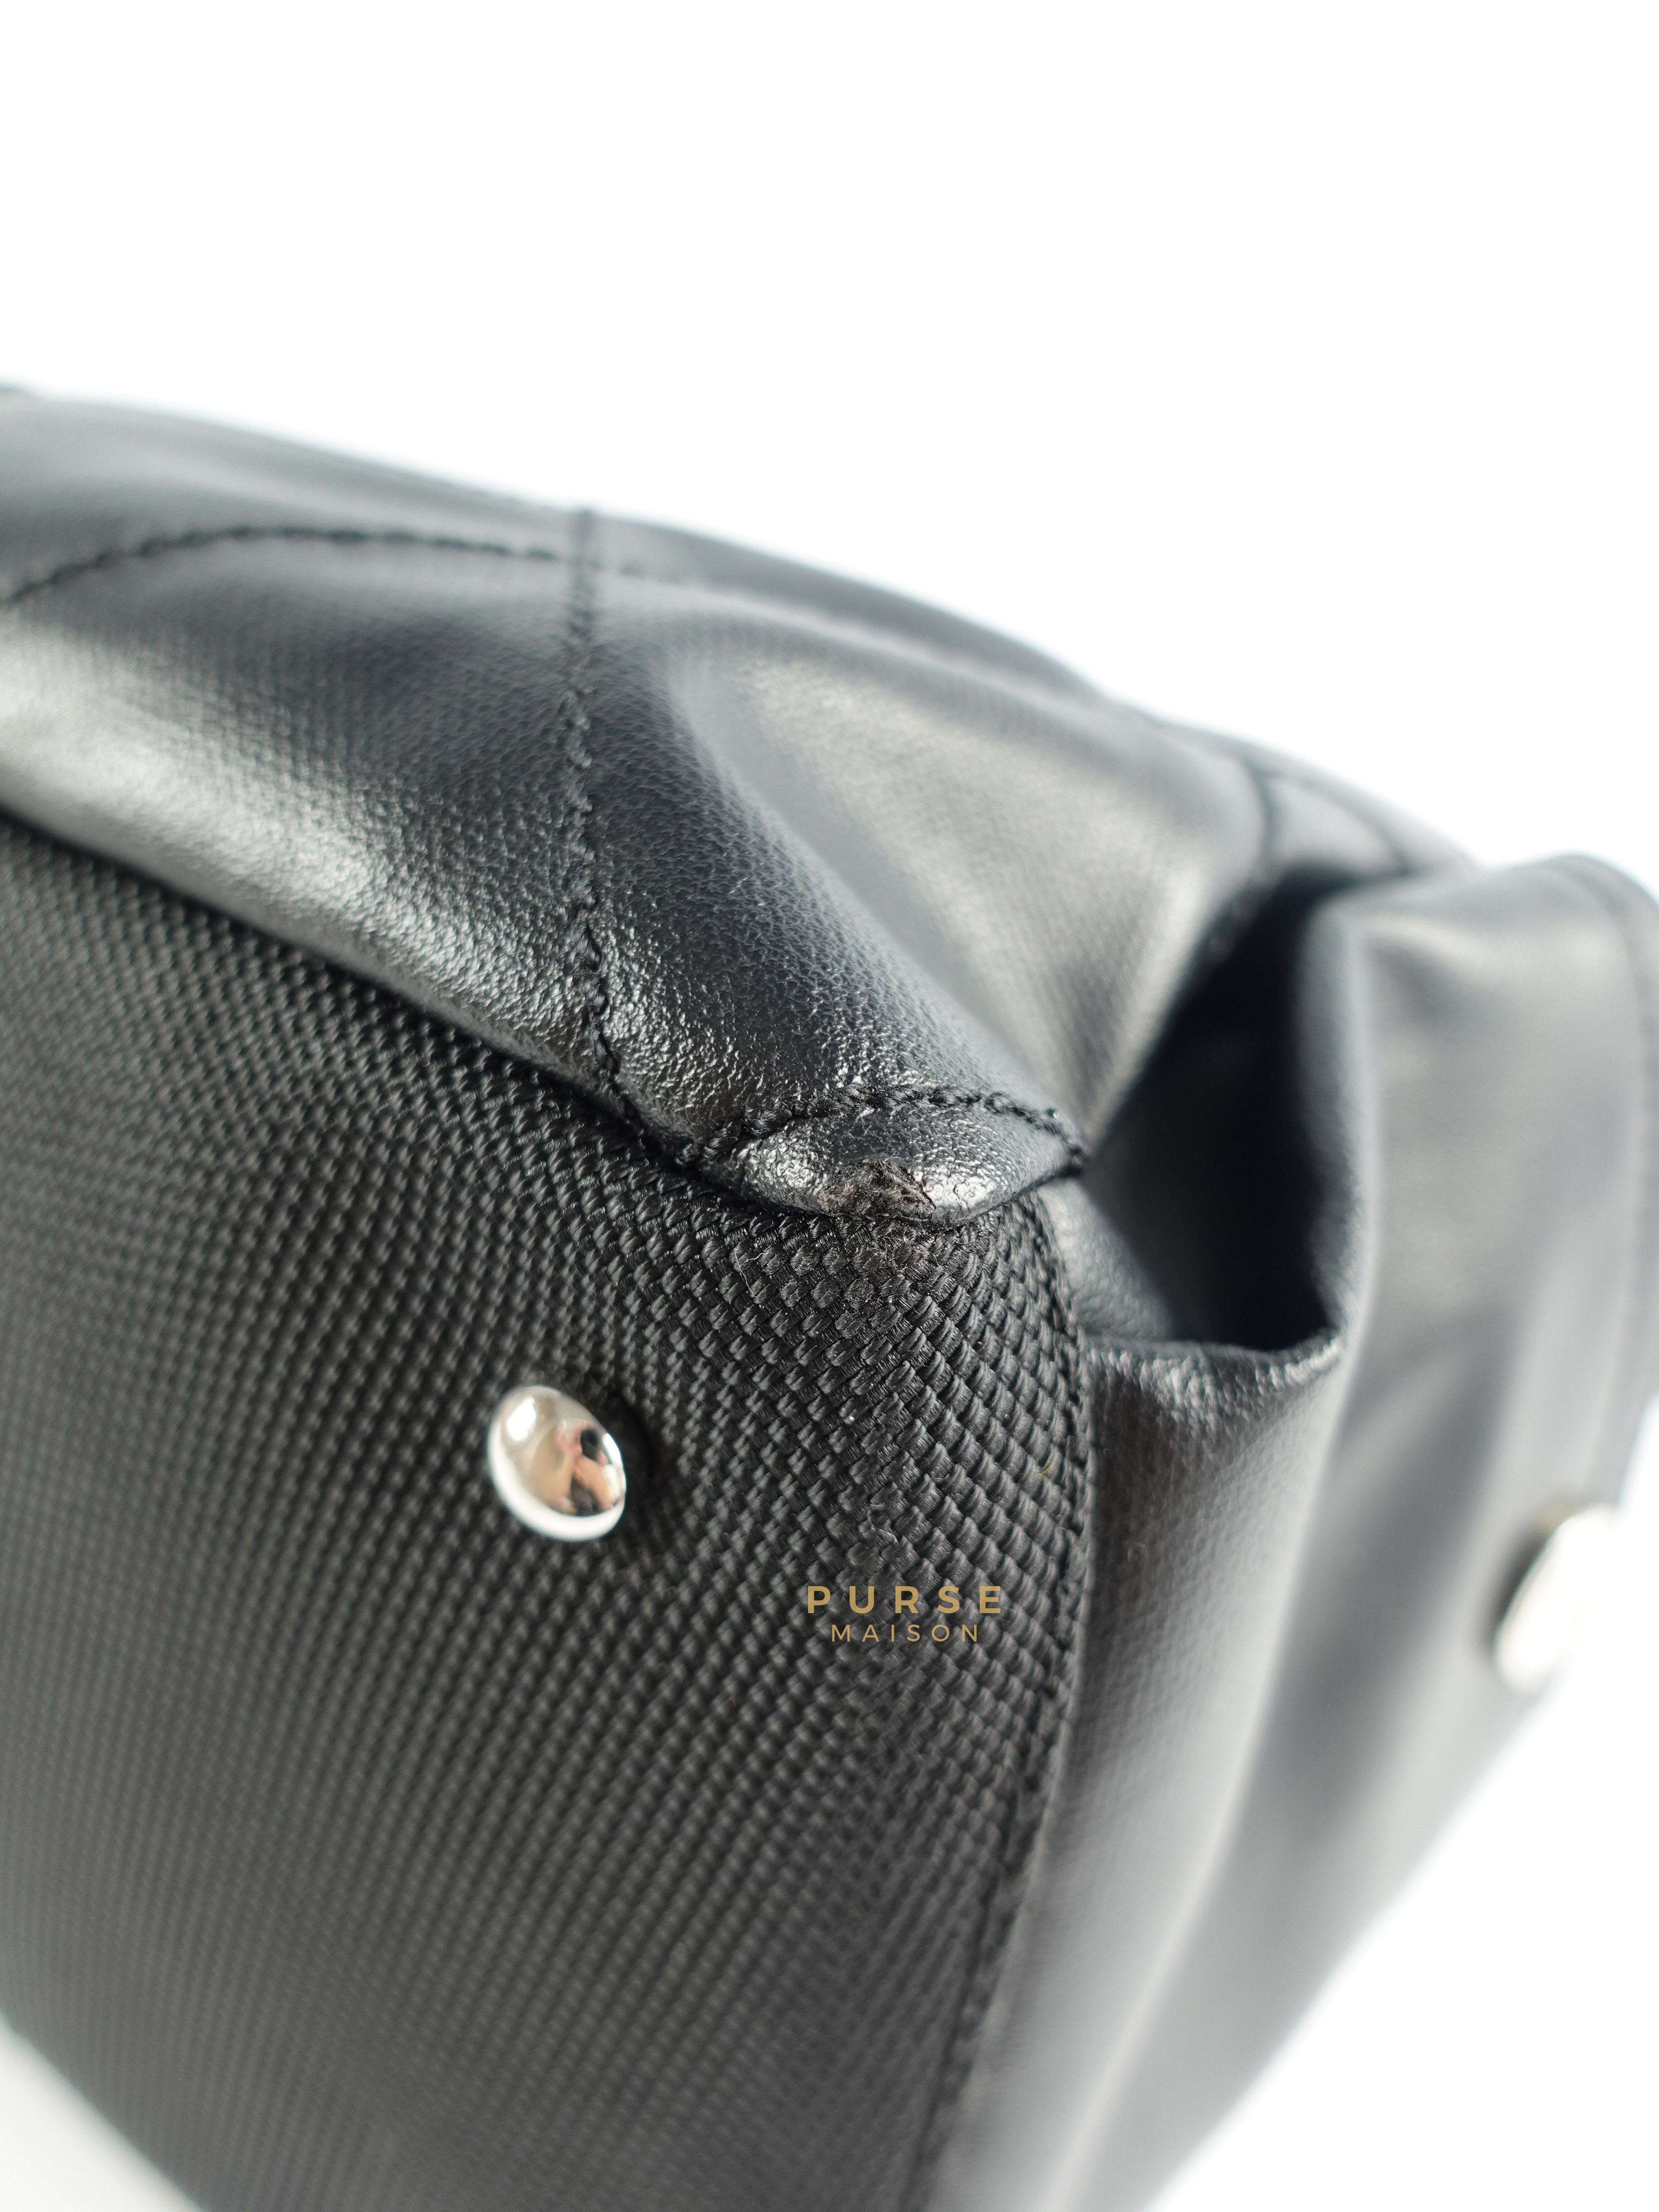 Biarritz Black Coated Canvas Hobo Bag Series 11 | Purse Maison Luxury Bags Shop